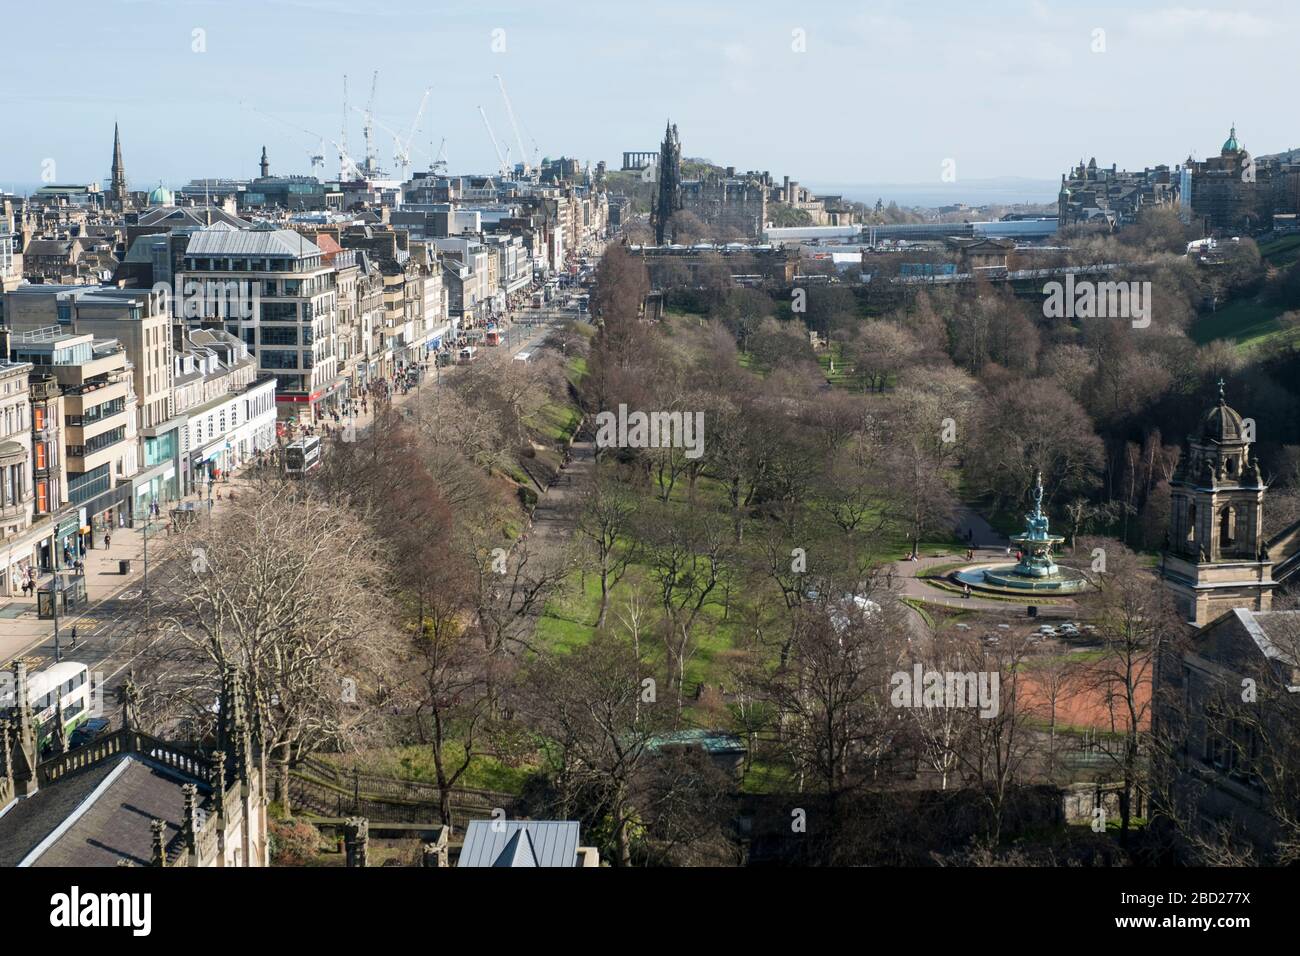 A view looking east of Princes Street and West Princes street gardens, Edinburgh, Scotland. Stock Photo